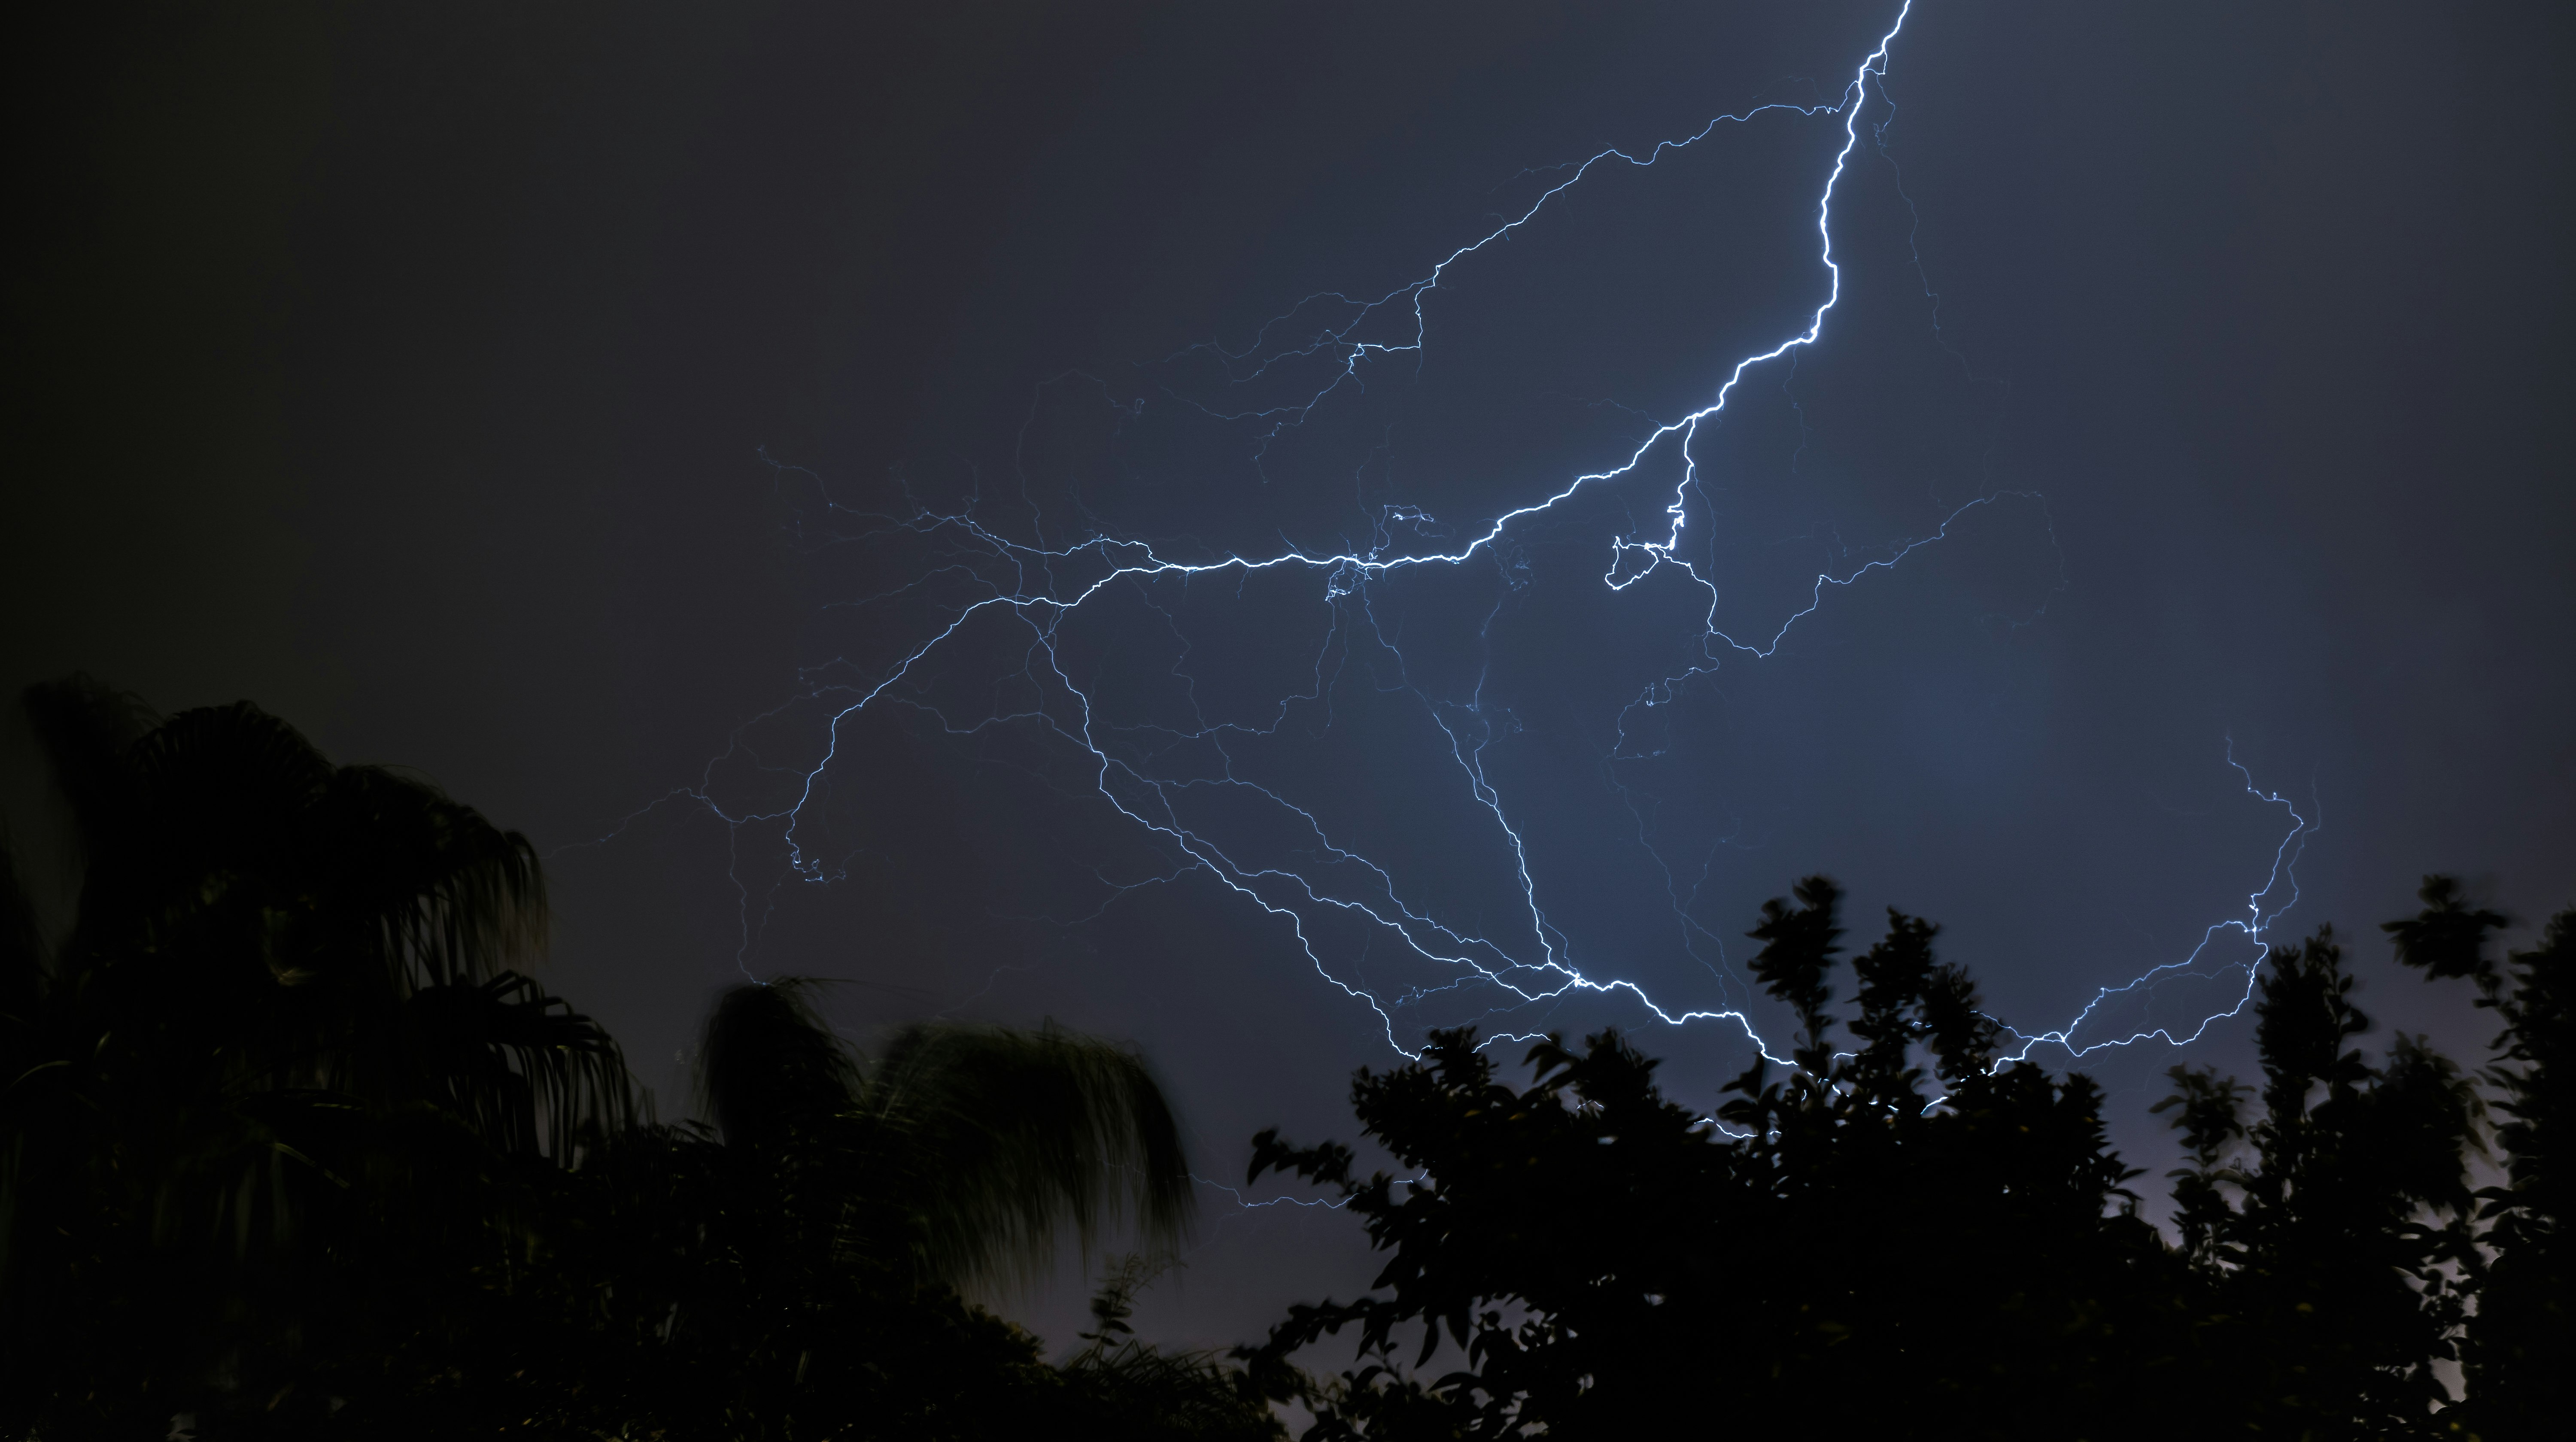 lightning at night time